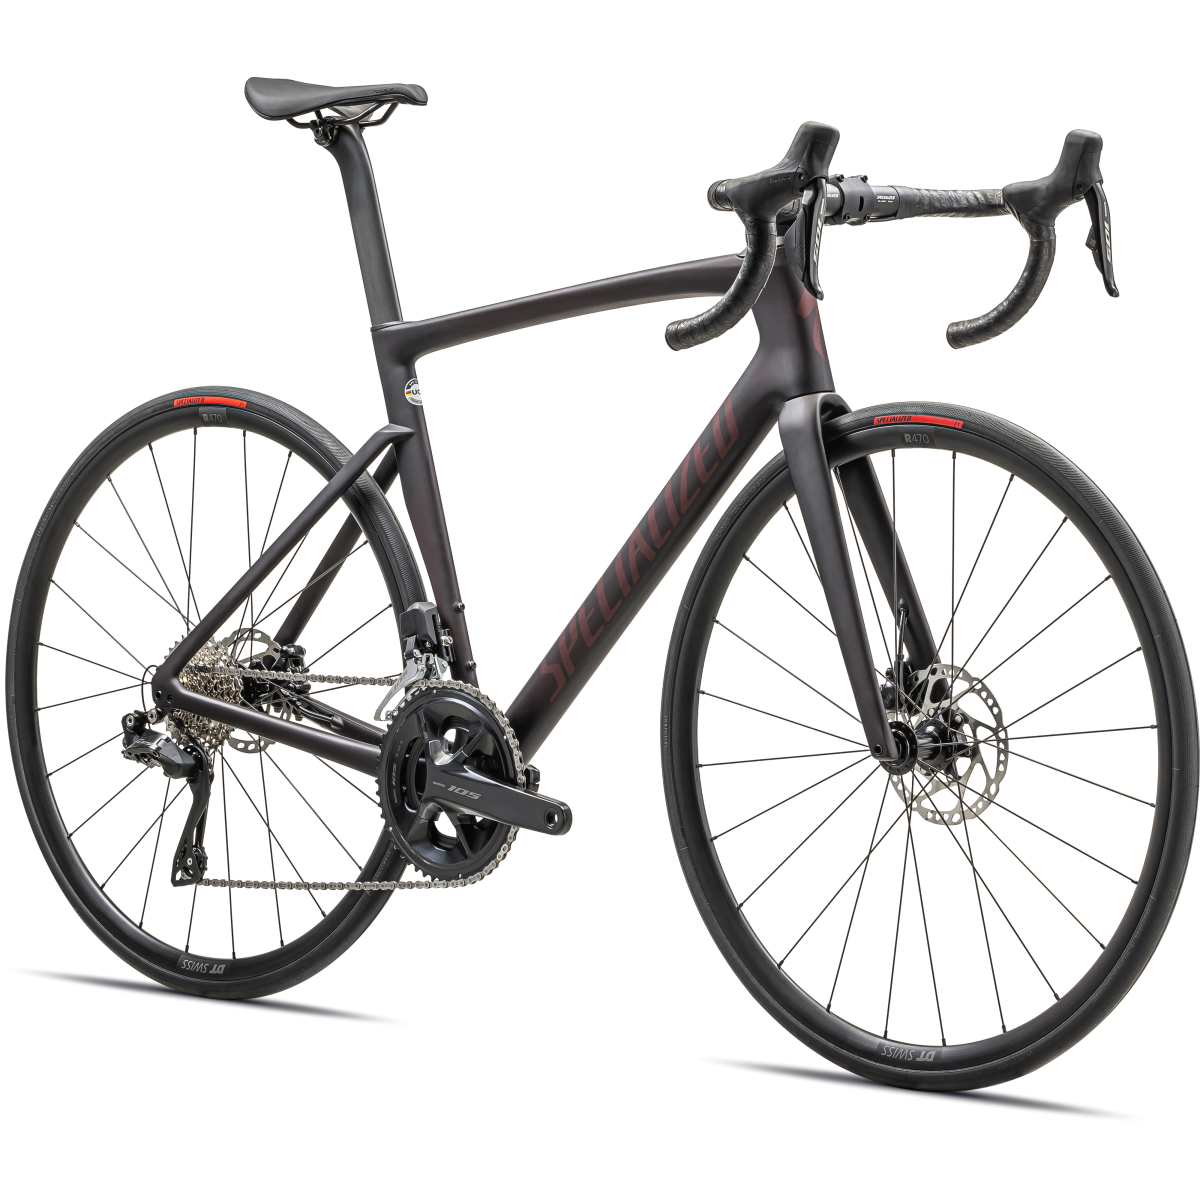 Specialized Tarmac SL7 Comp plento dviratis / Satin Red Tint Over Carbon